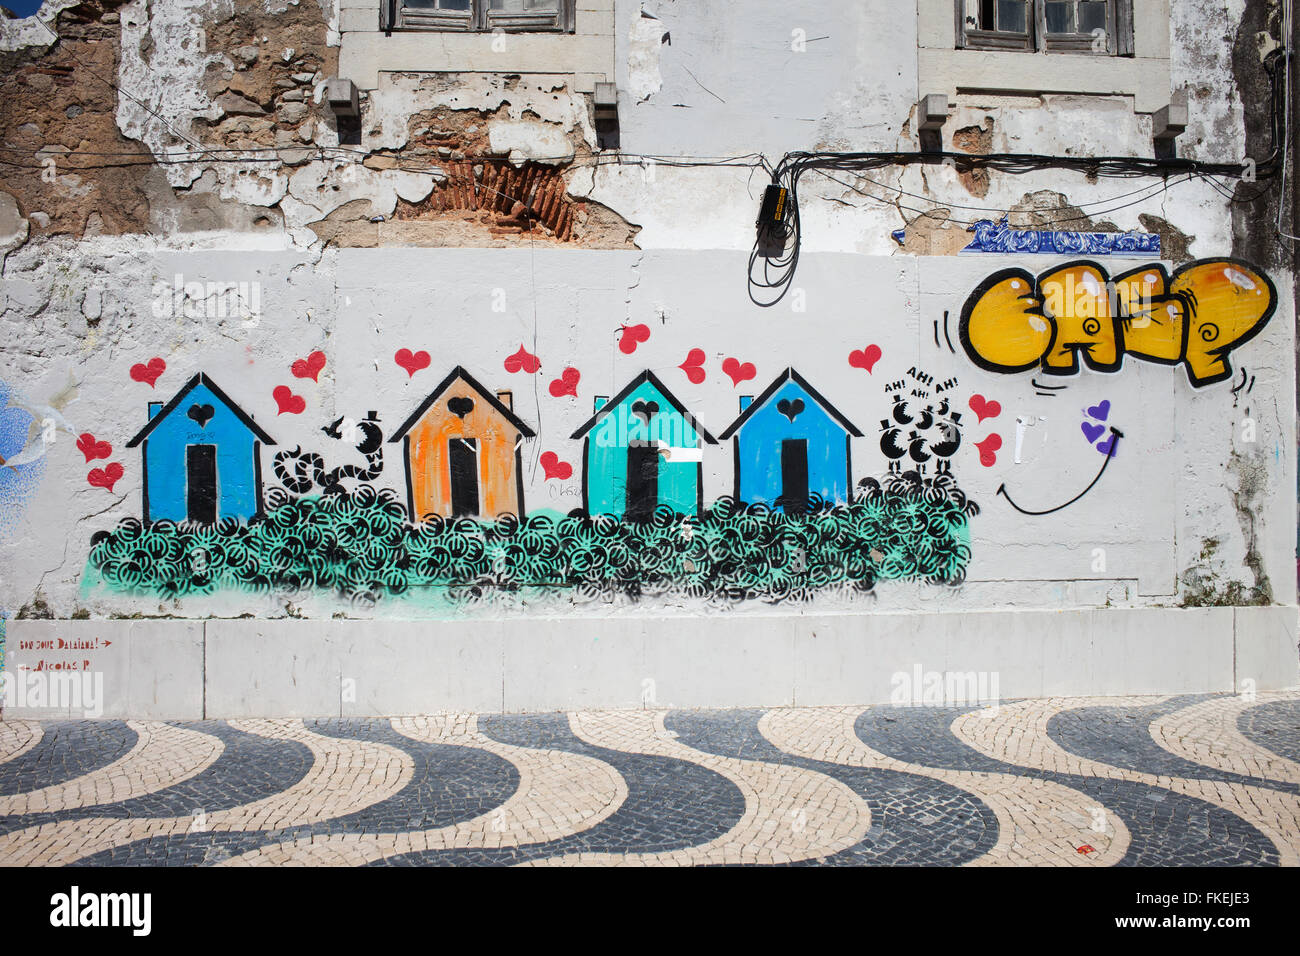 Portugal, Cascais town, mural, street art, graffiti on a wall Stock Photo